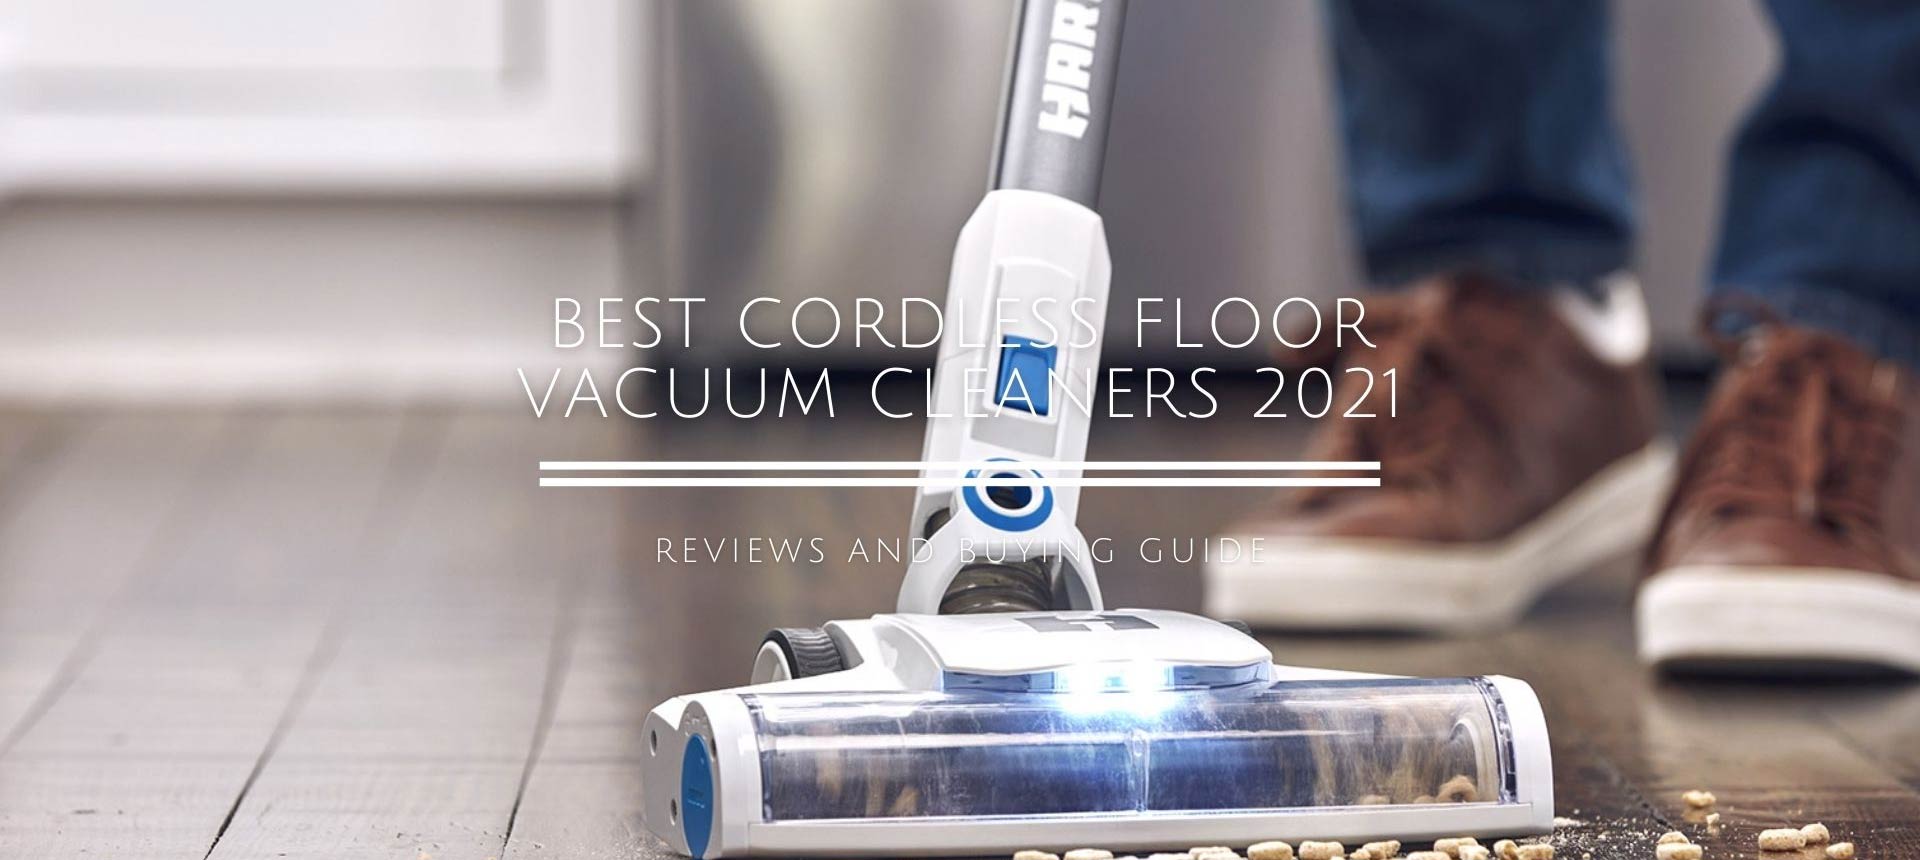 Best Cordless Floor Vacuum Cleaners 2021